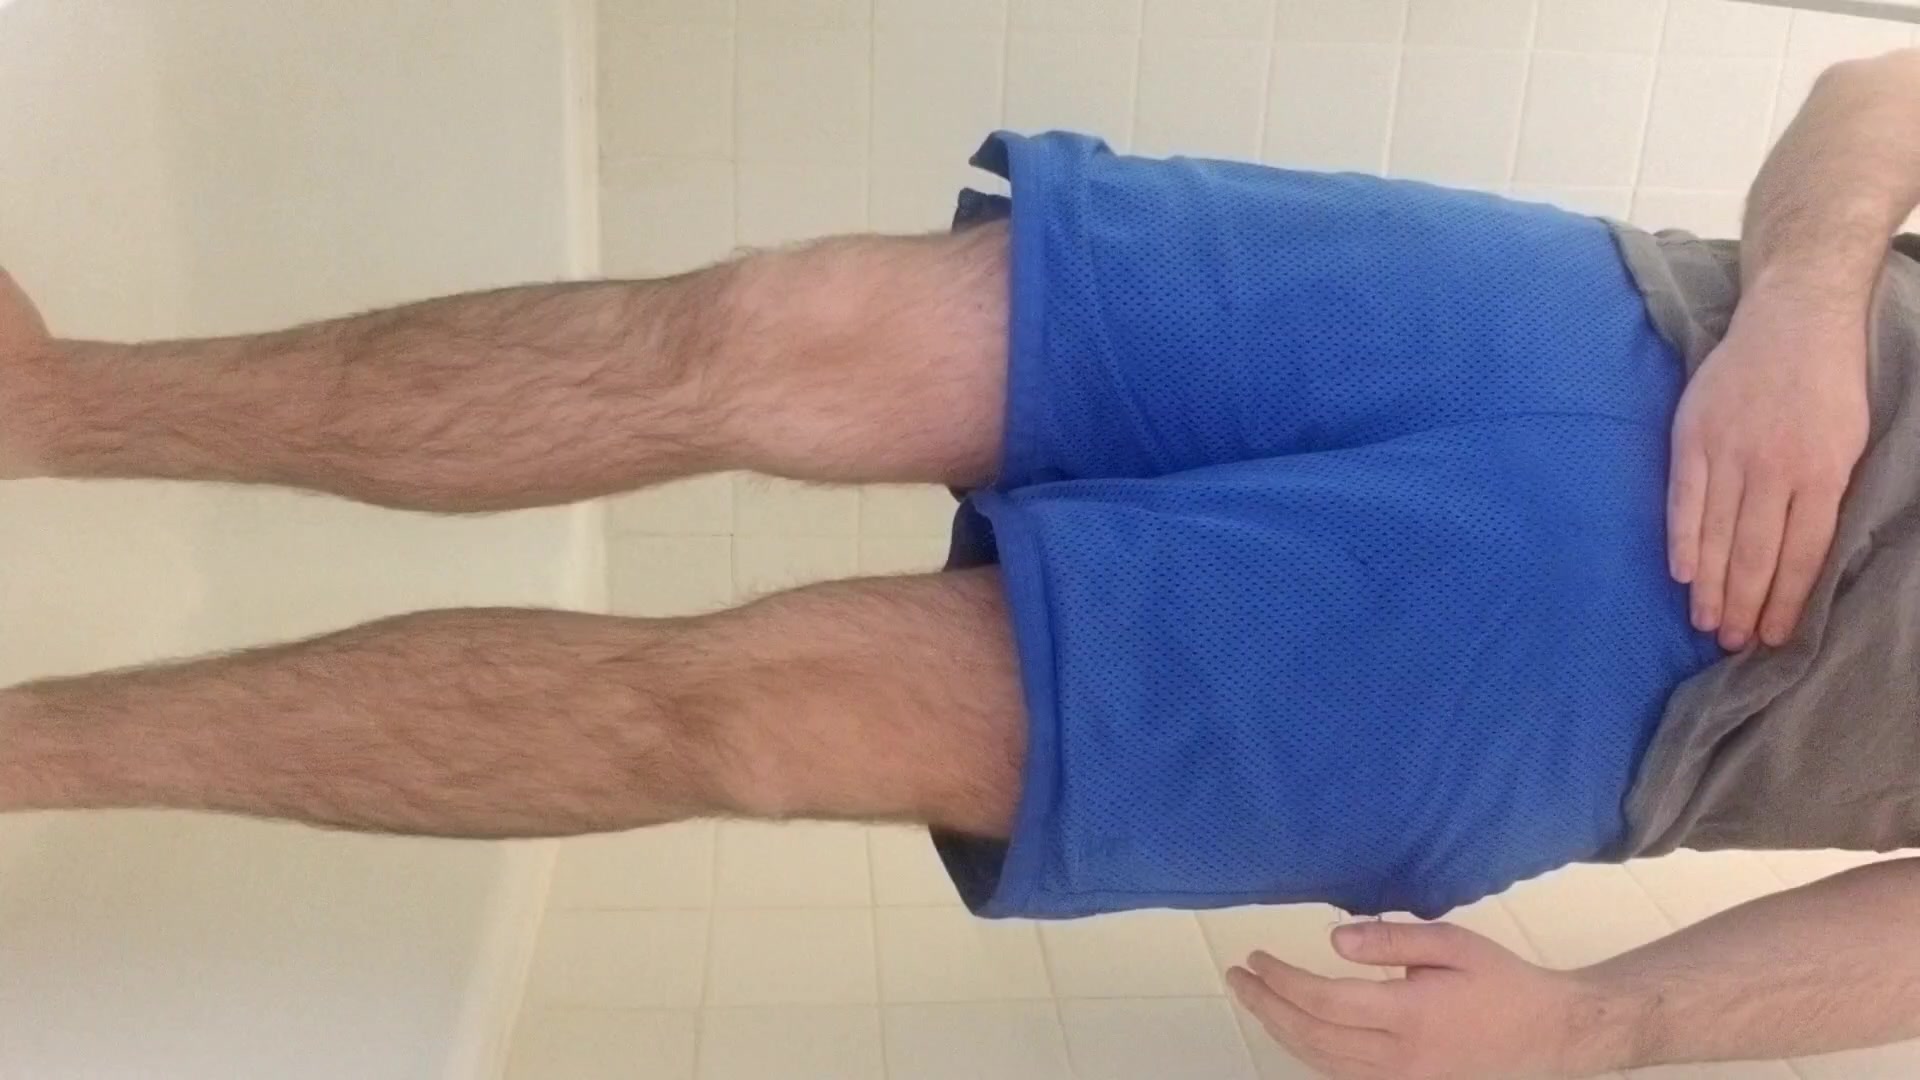 FLOODING my shorts